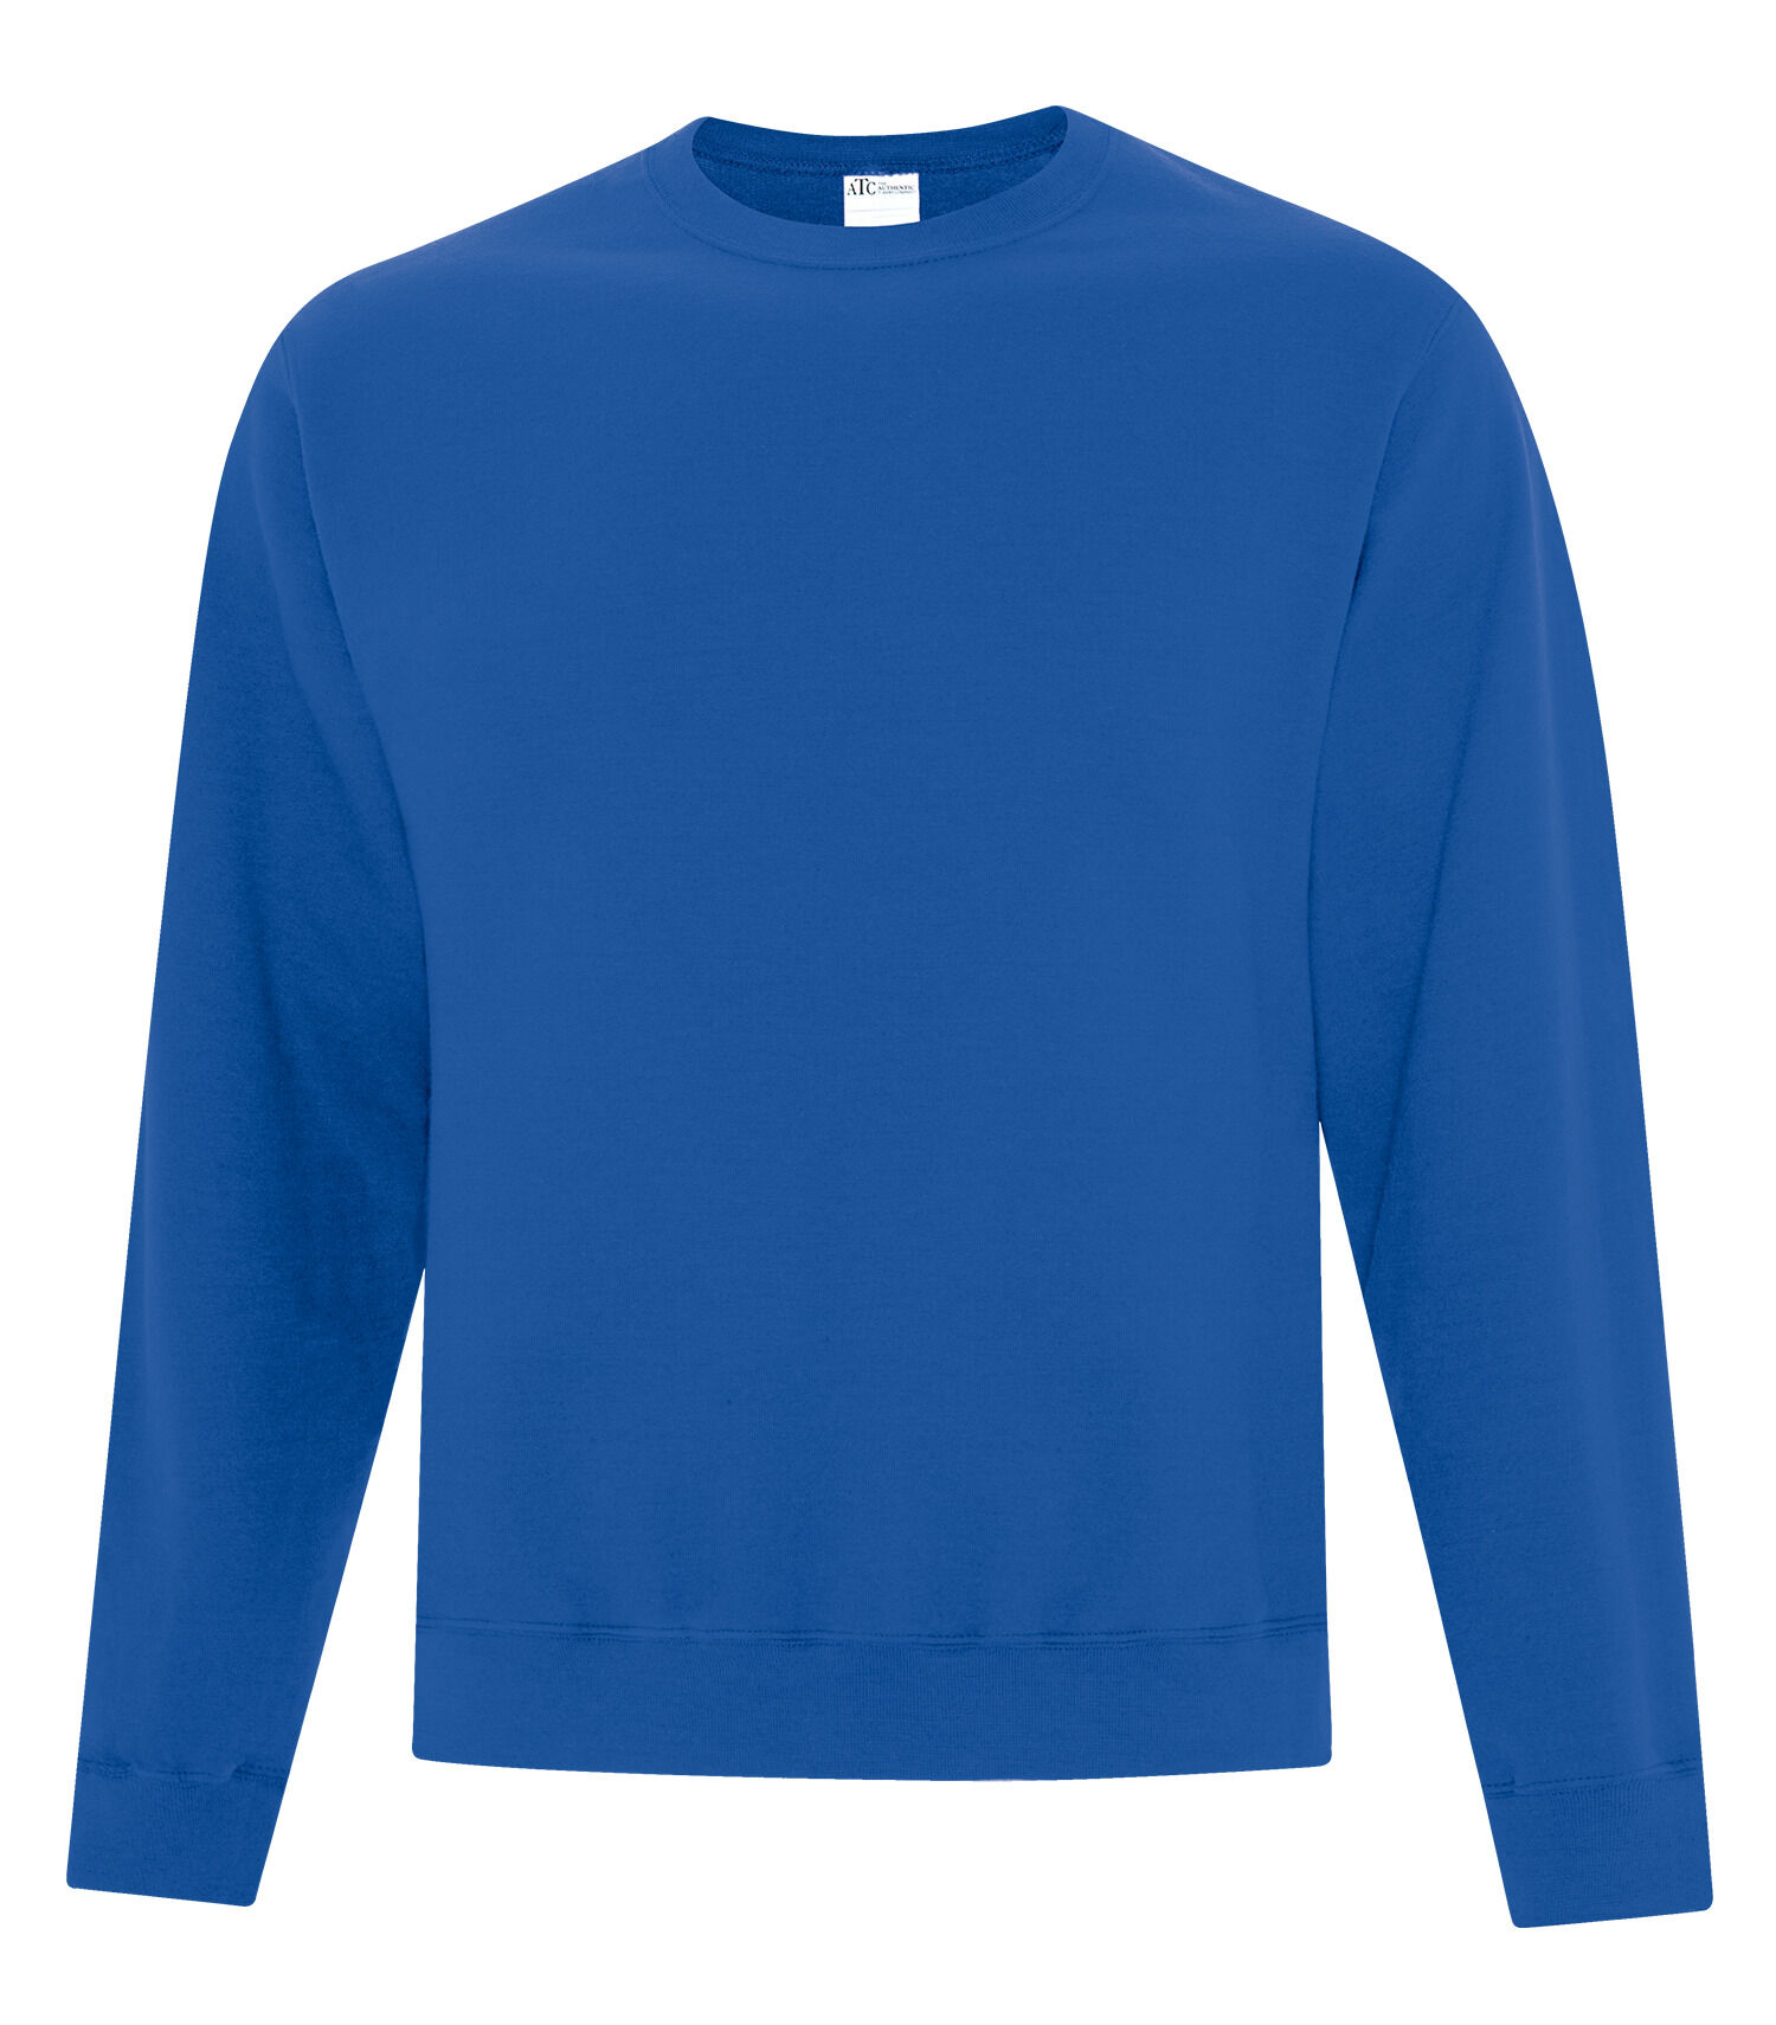  Crewneck Sweatshirt - Cotton Royal